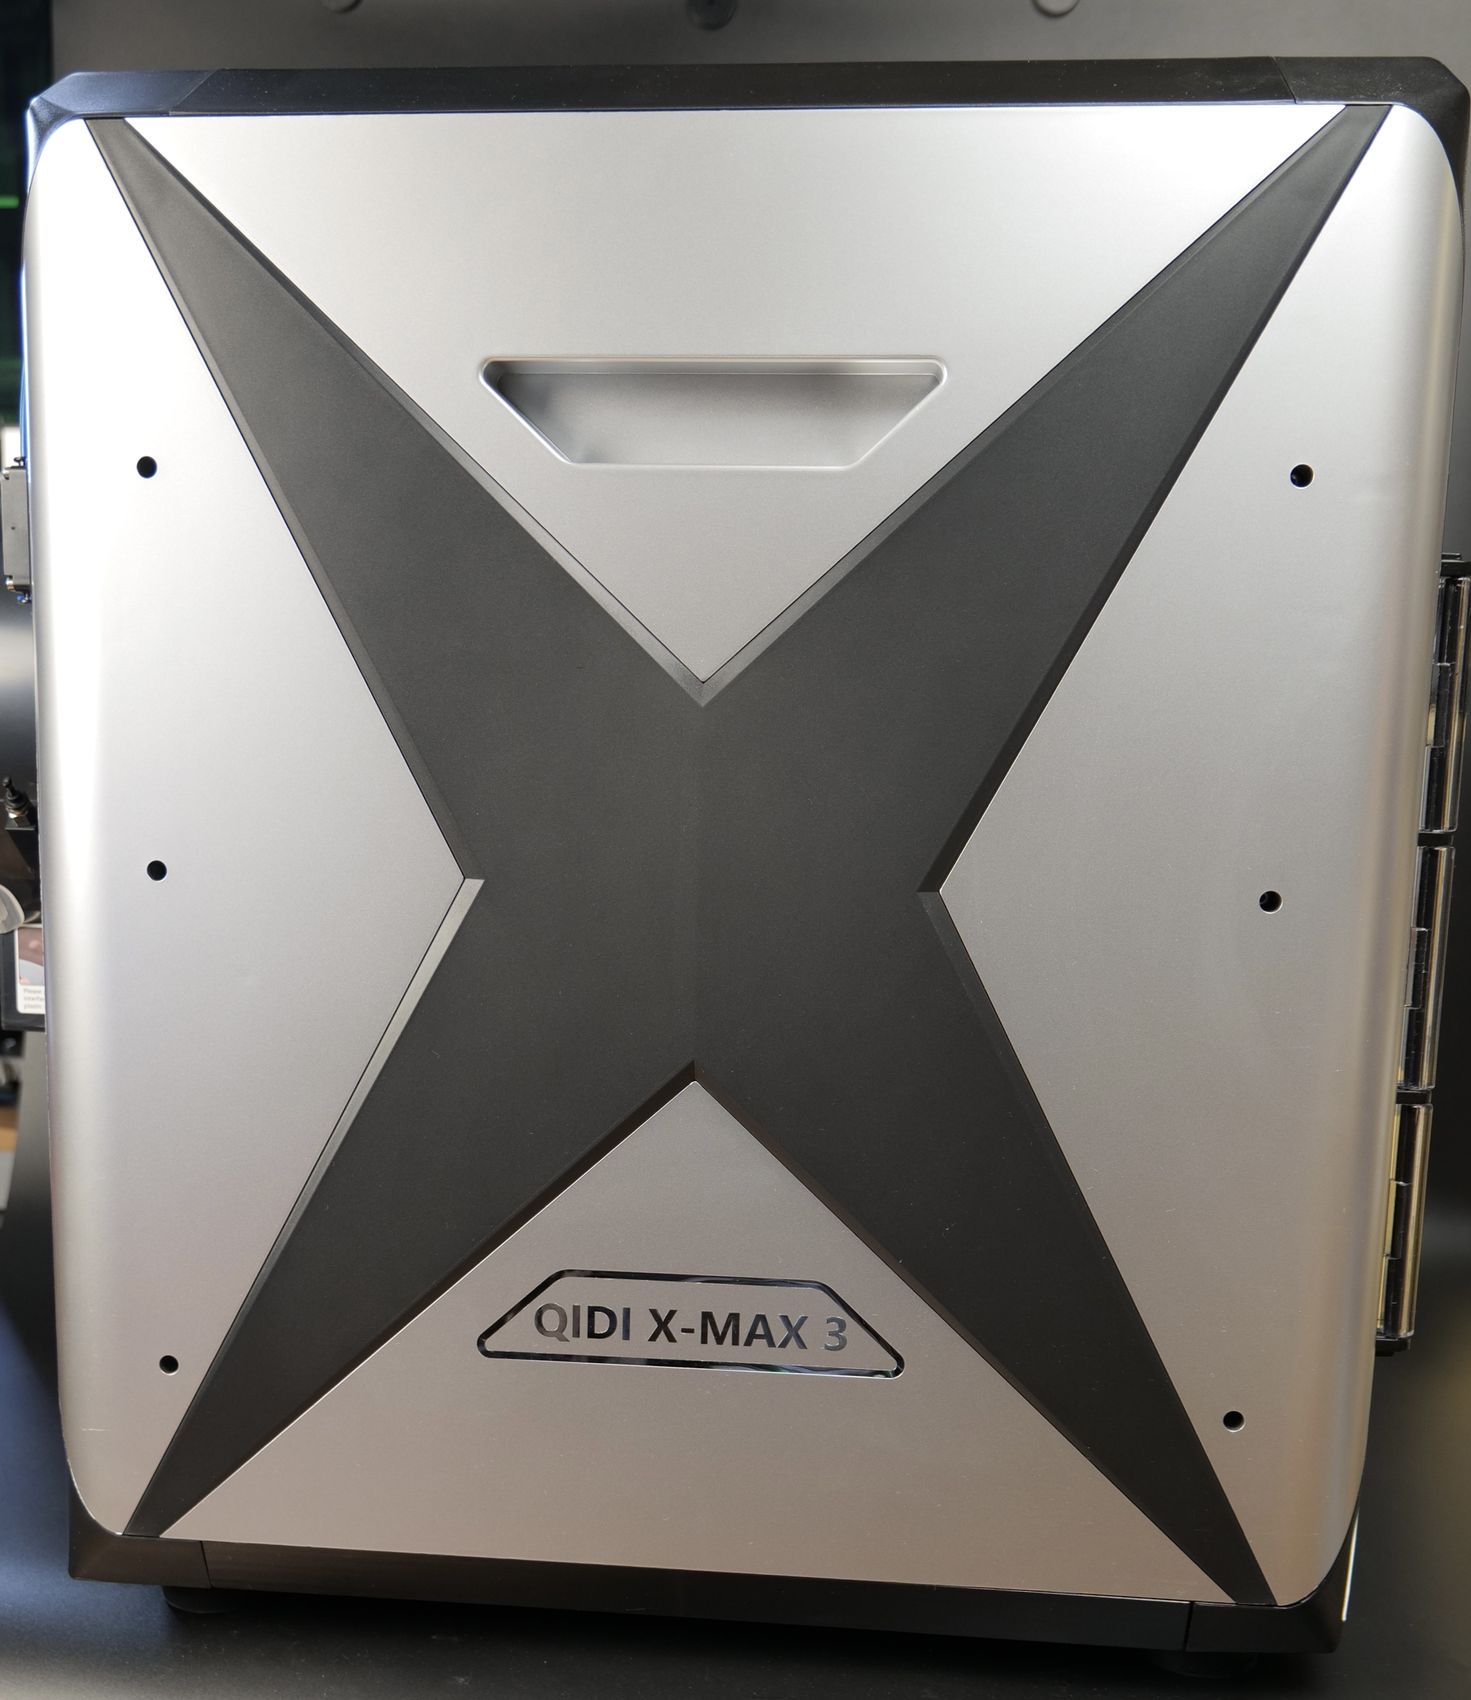 QIDI X MAX 3 Design2 | QIDI X-MAX 3 Review: Big Printer with Good Results